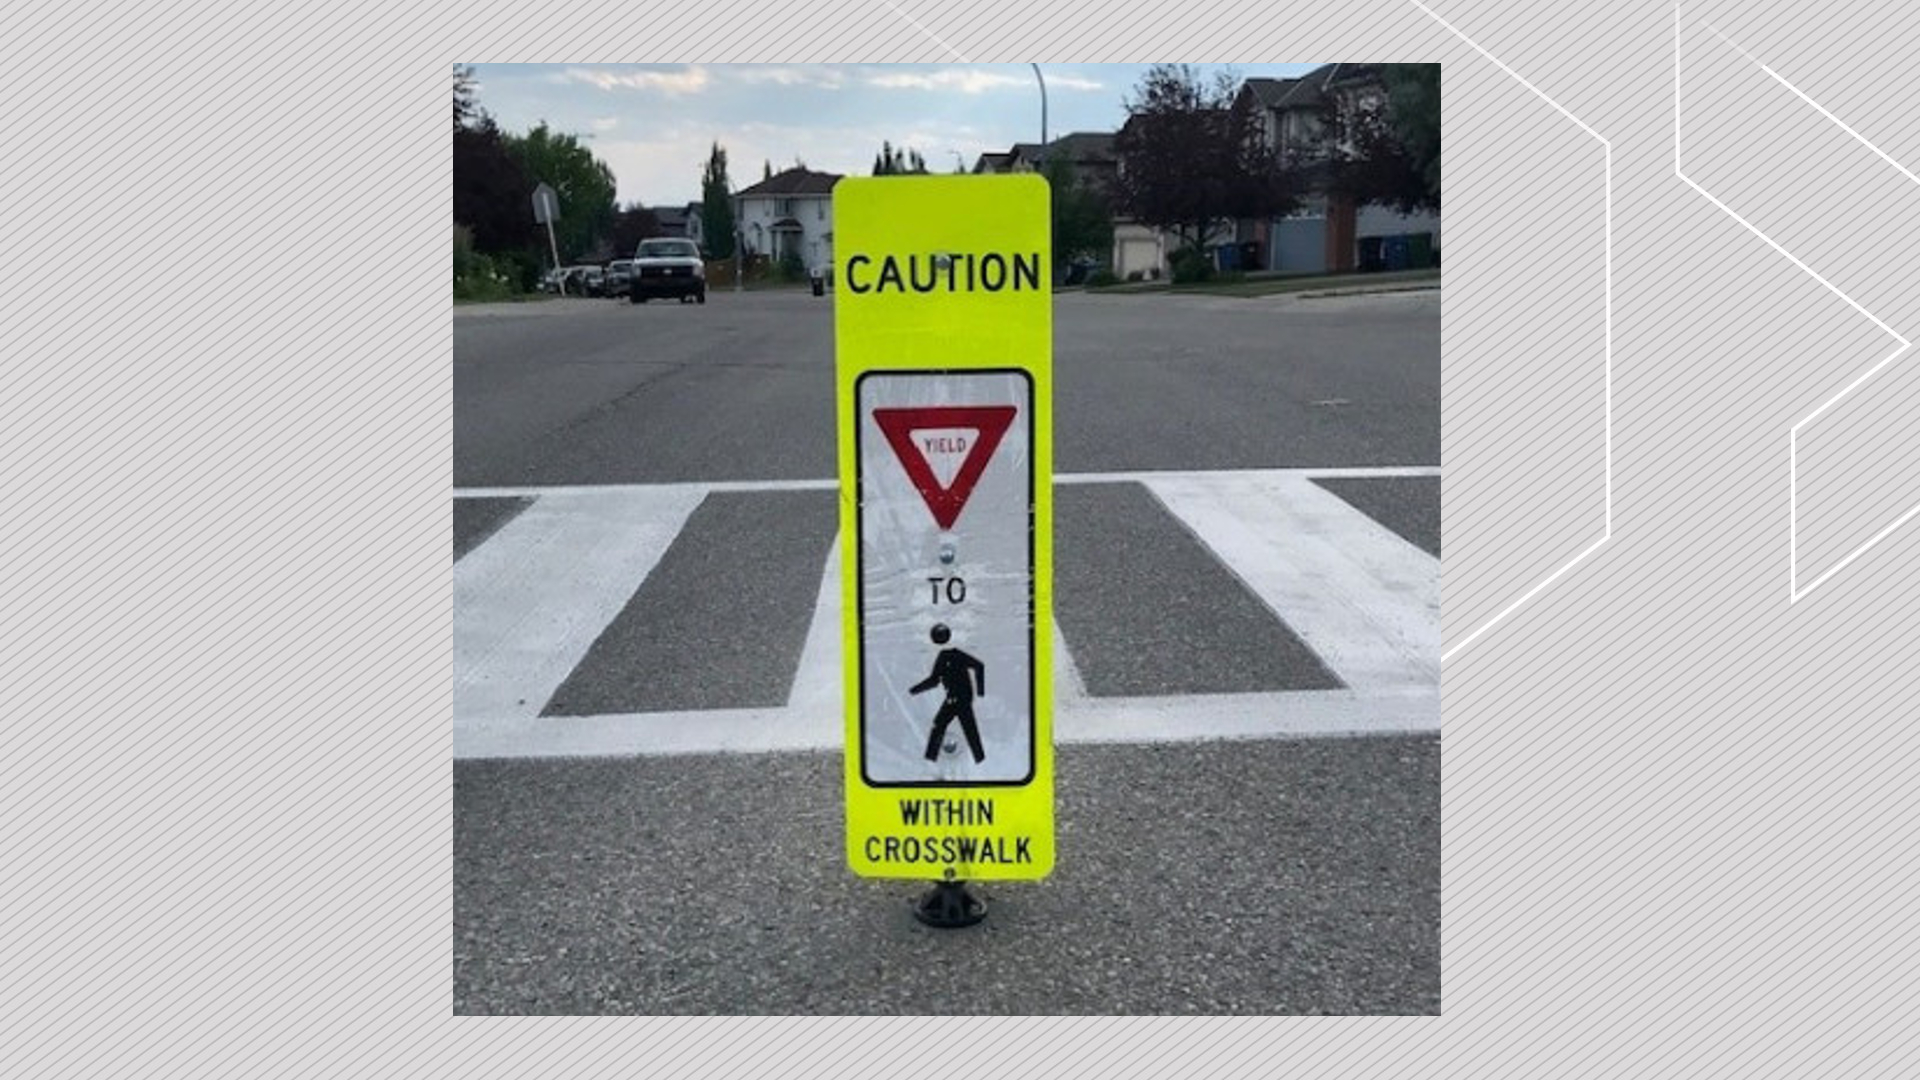 Calgary to enhance crosswalks near schools with in-street sign installations